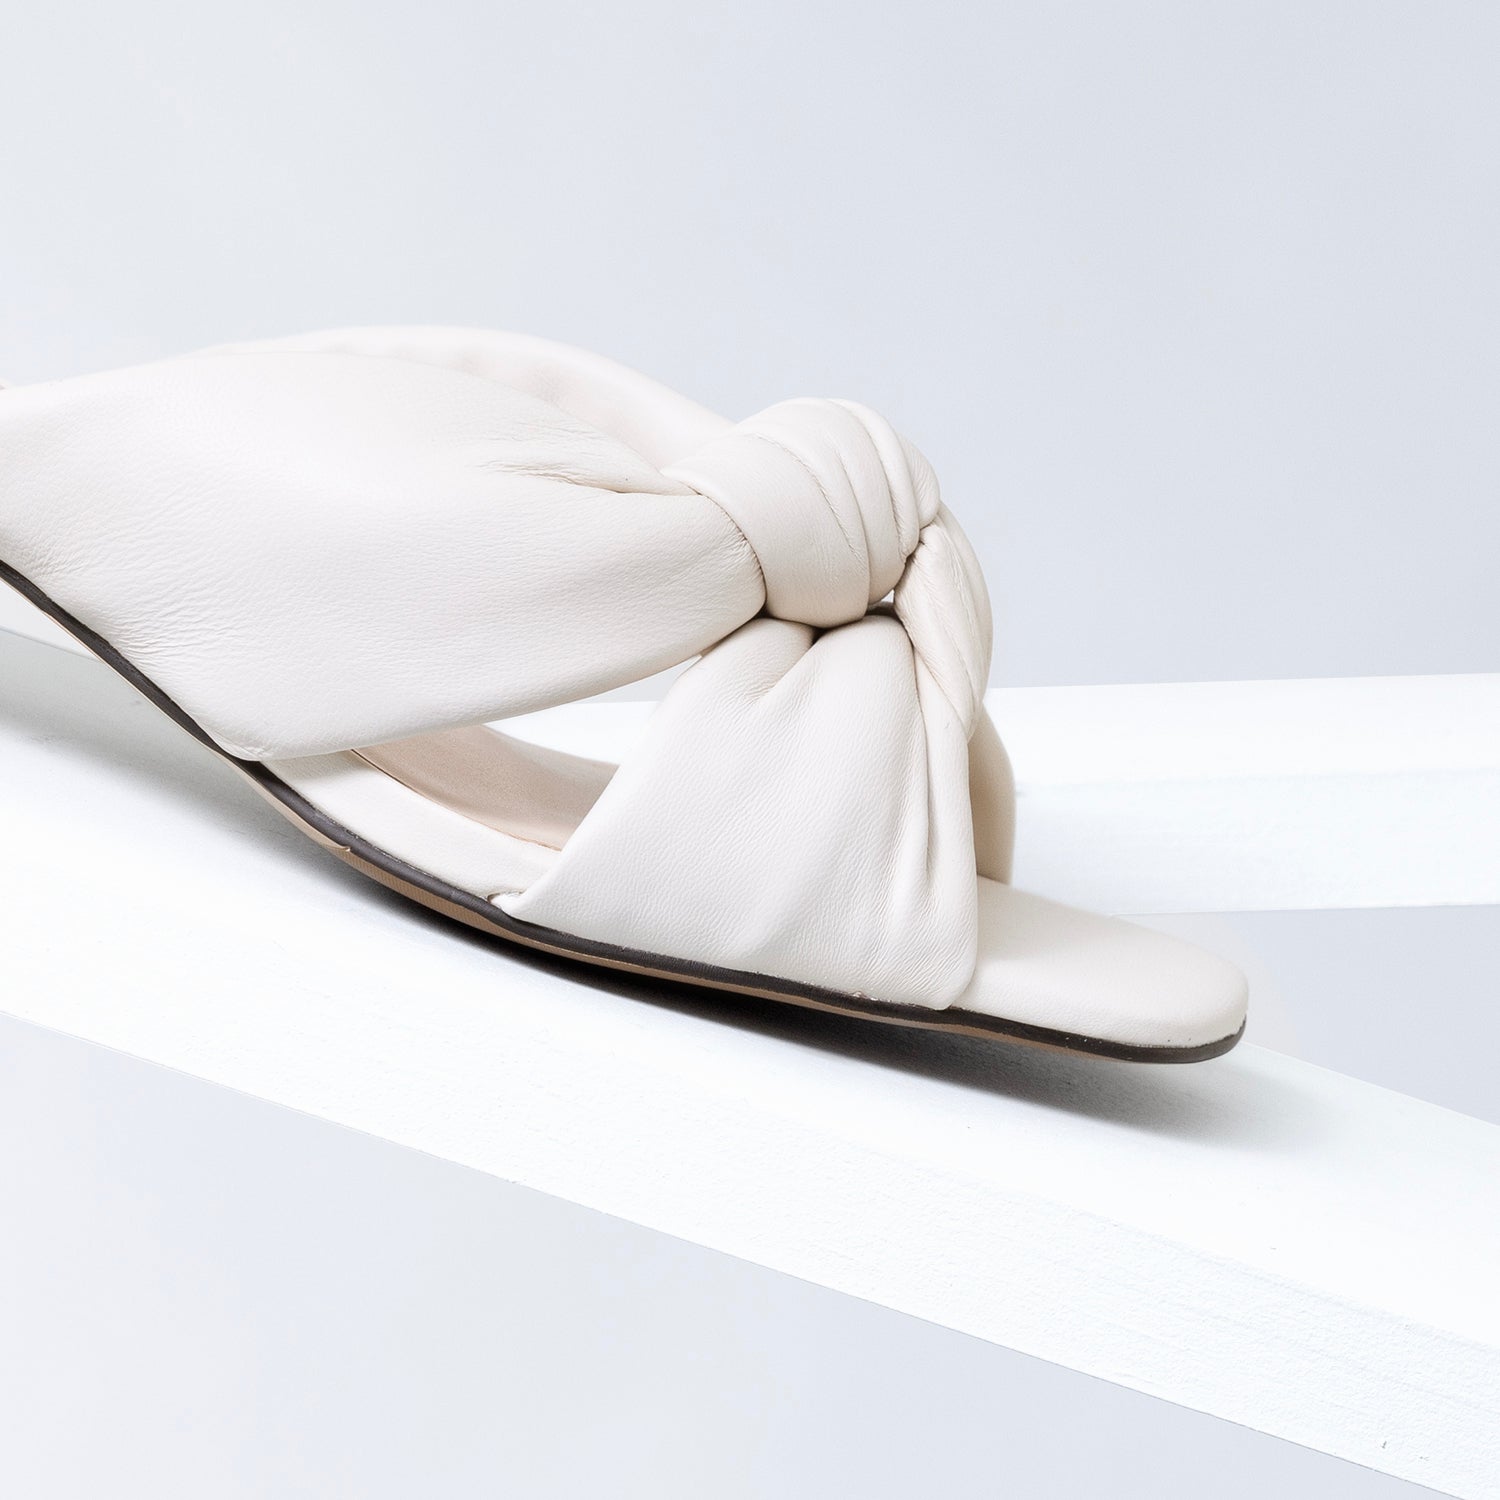 Adele Mule Sandal 40mm | Ivory leather